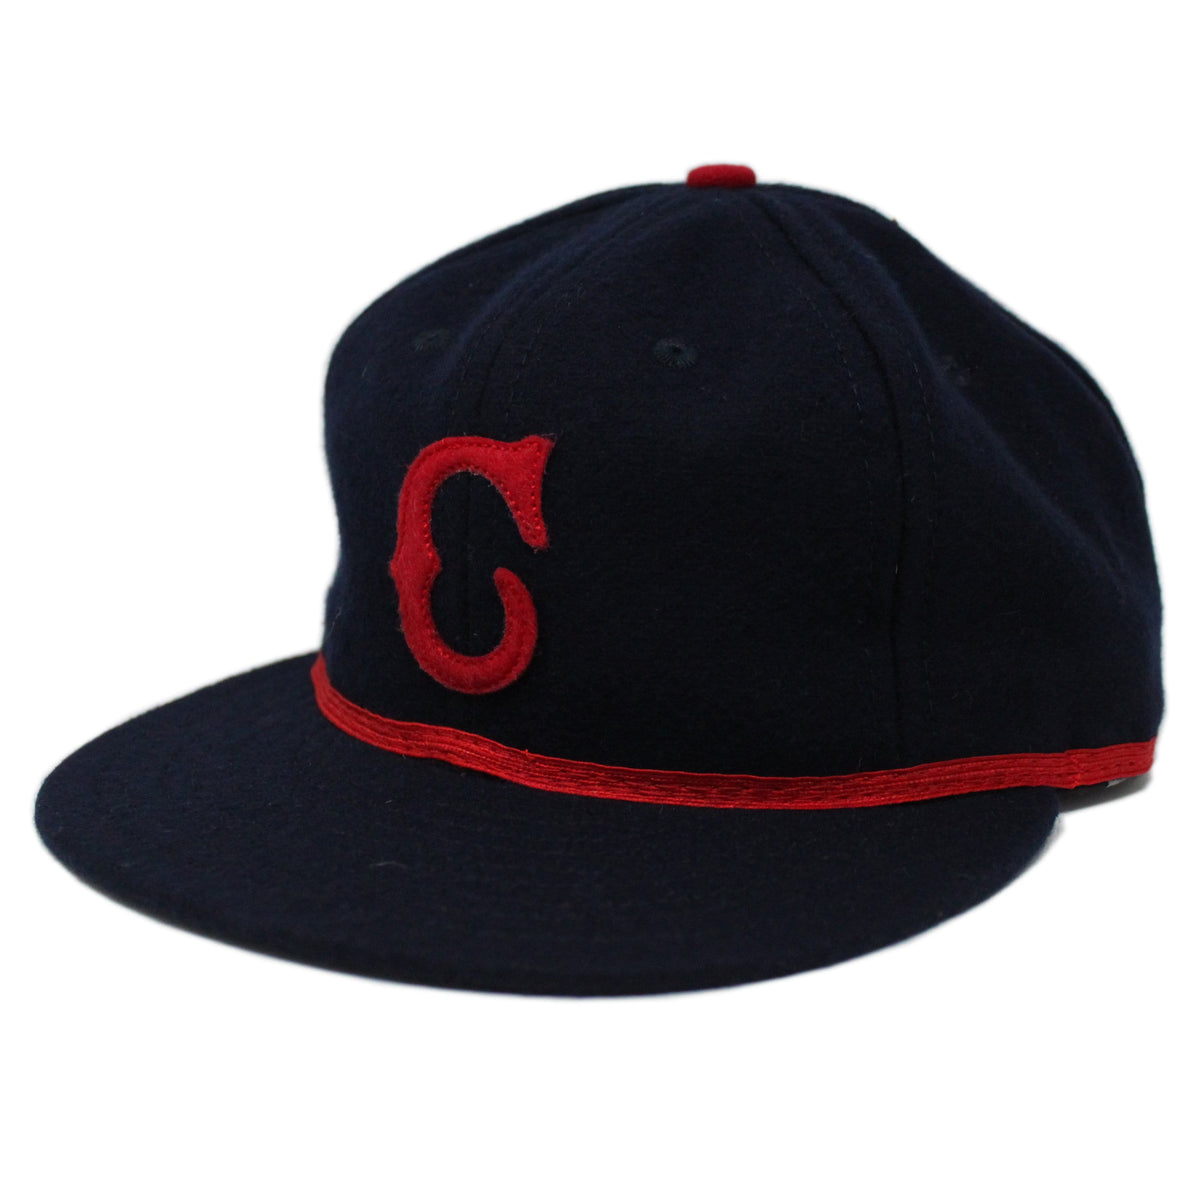 Ebbets Cleveland Buckeyes 1947 Baseball Cap